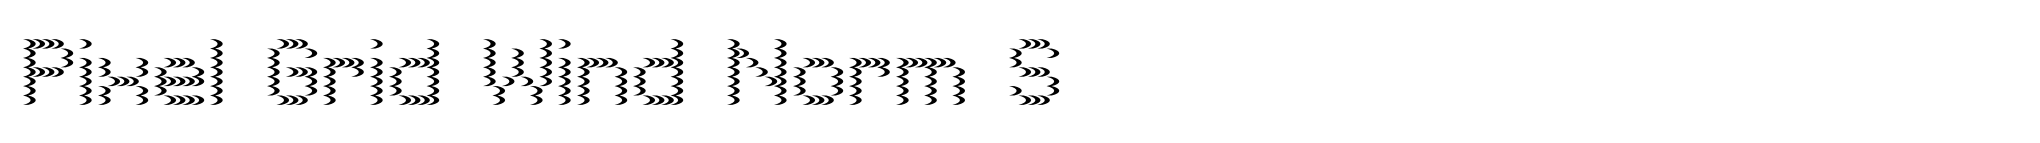 Pixel Grid Wind Norm S image